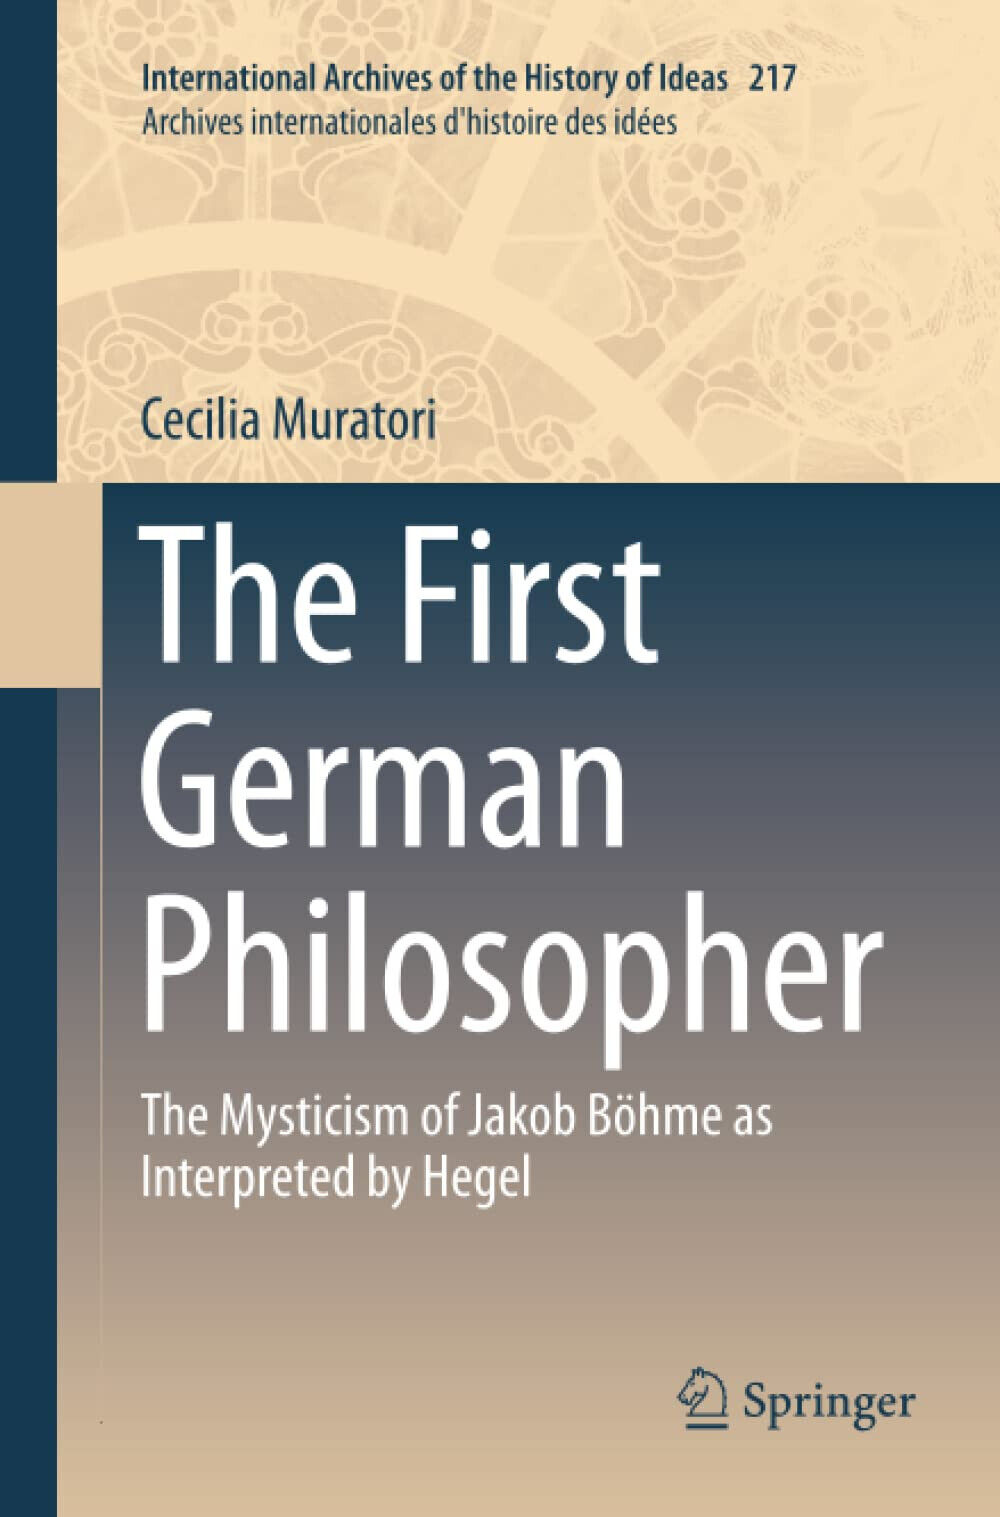 The First German Philosopher - Cecilia Muratori - Springer, 2018